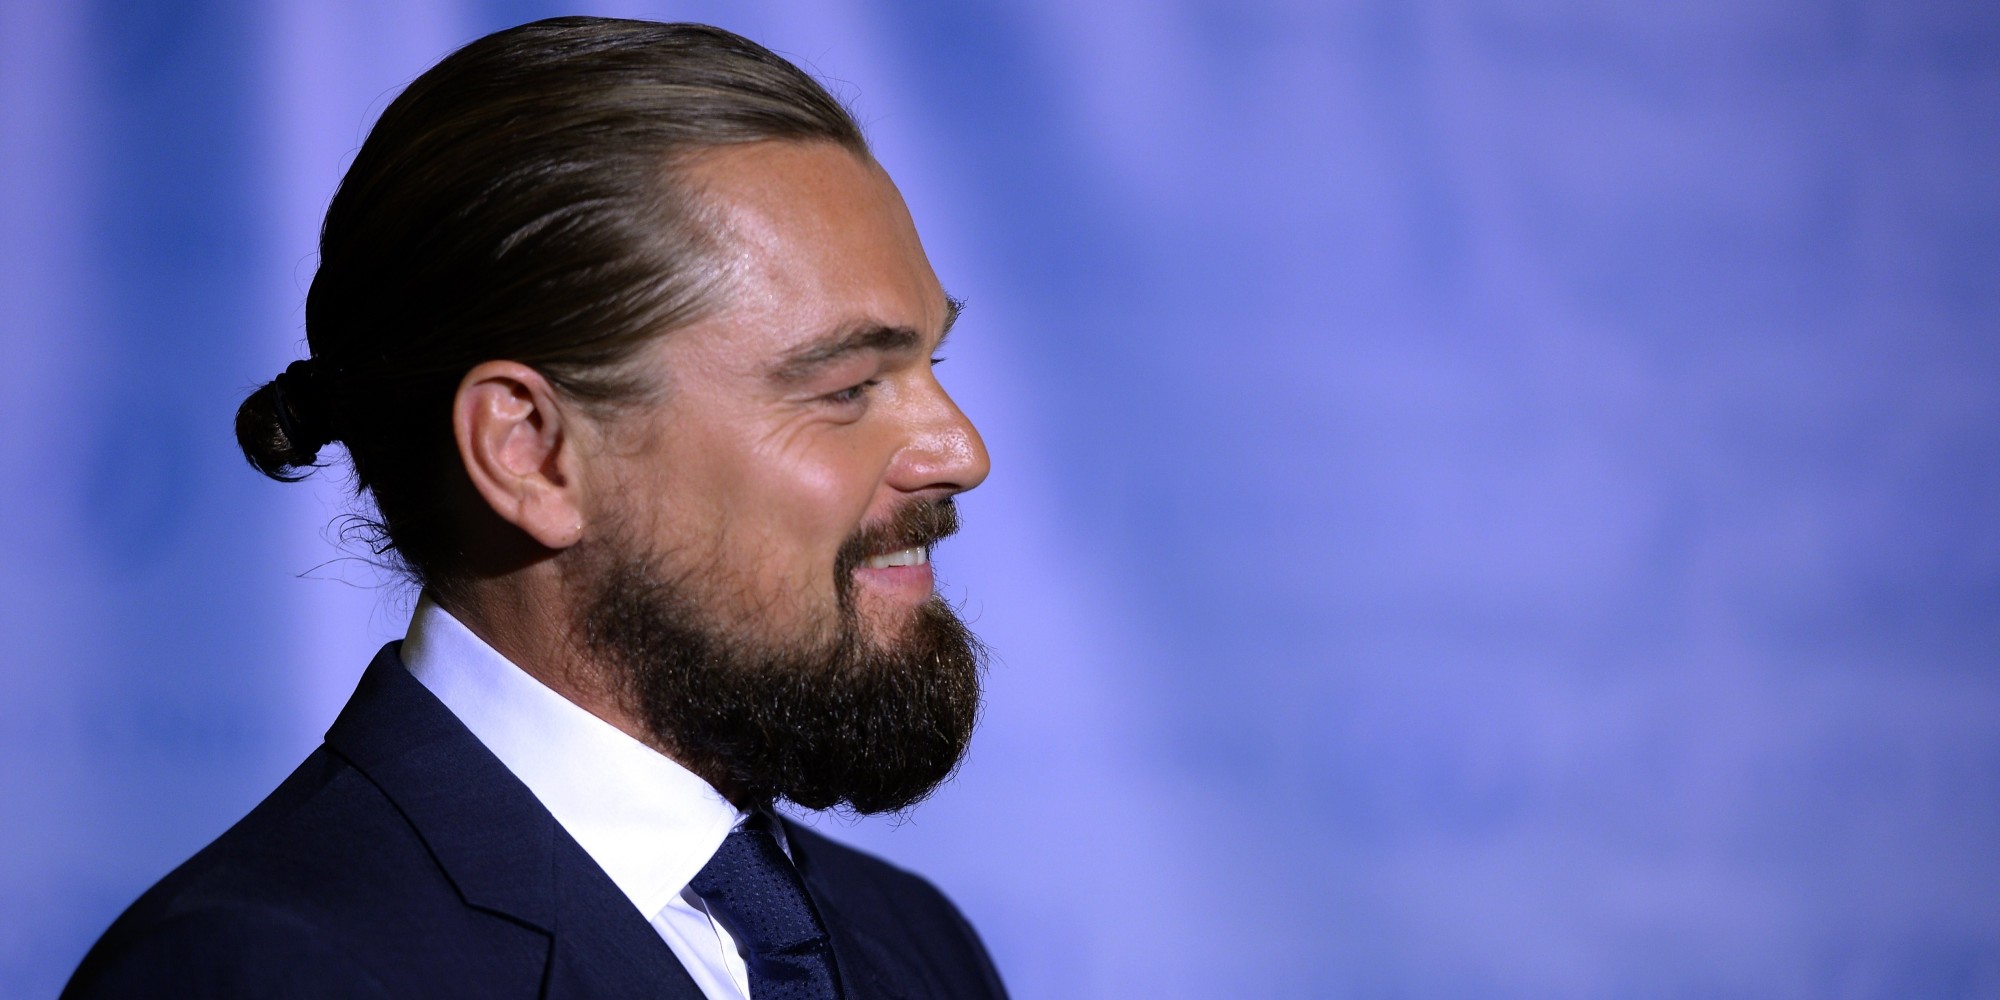 Leonardo DiCaprio with a beard and a suit